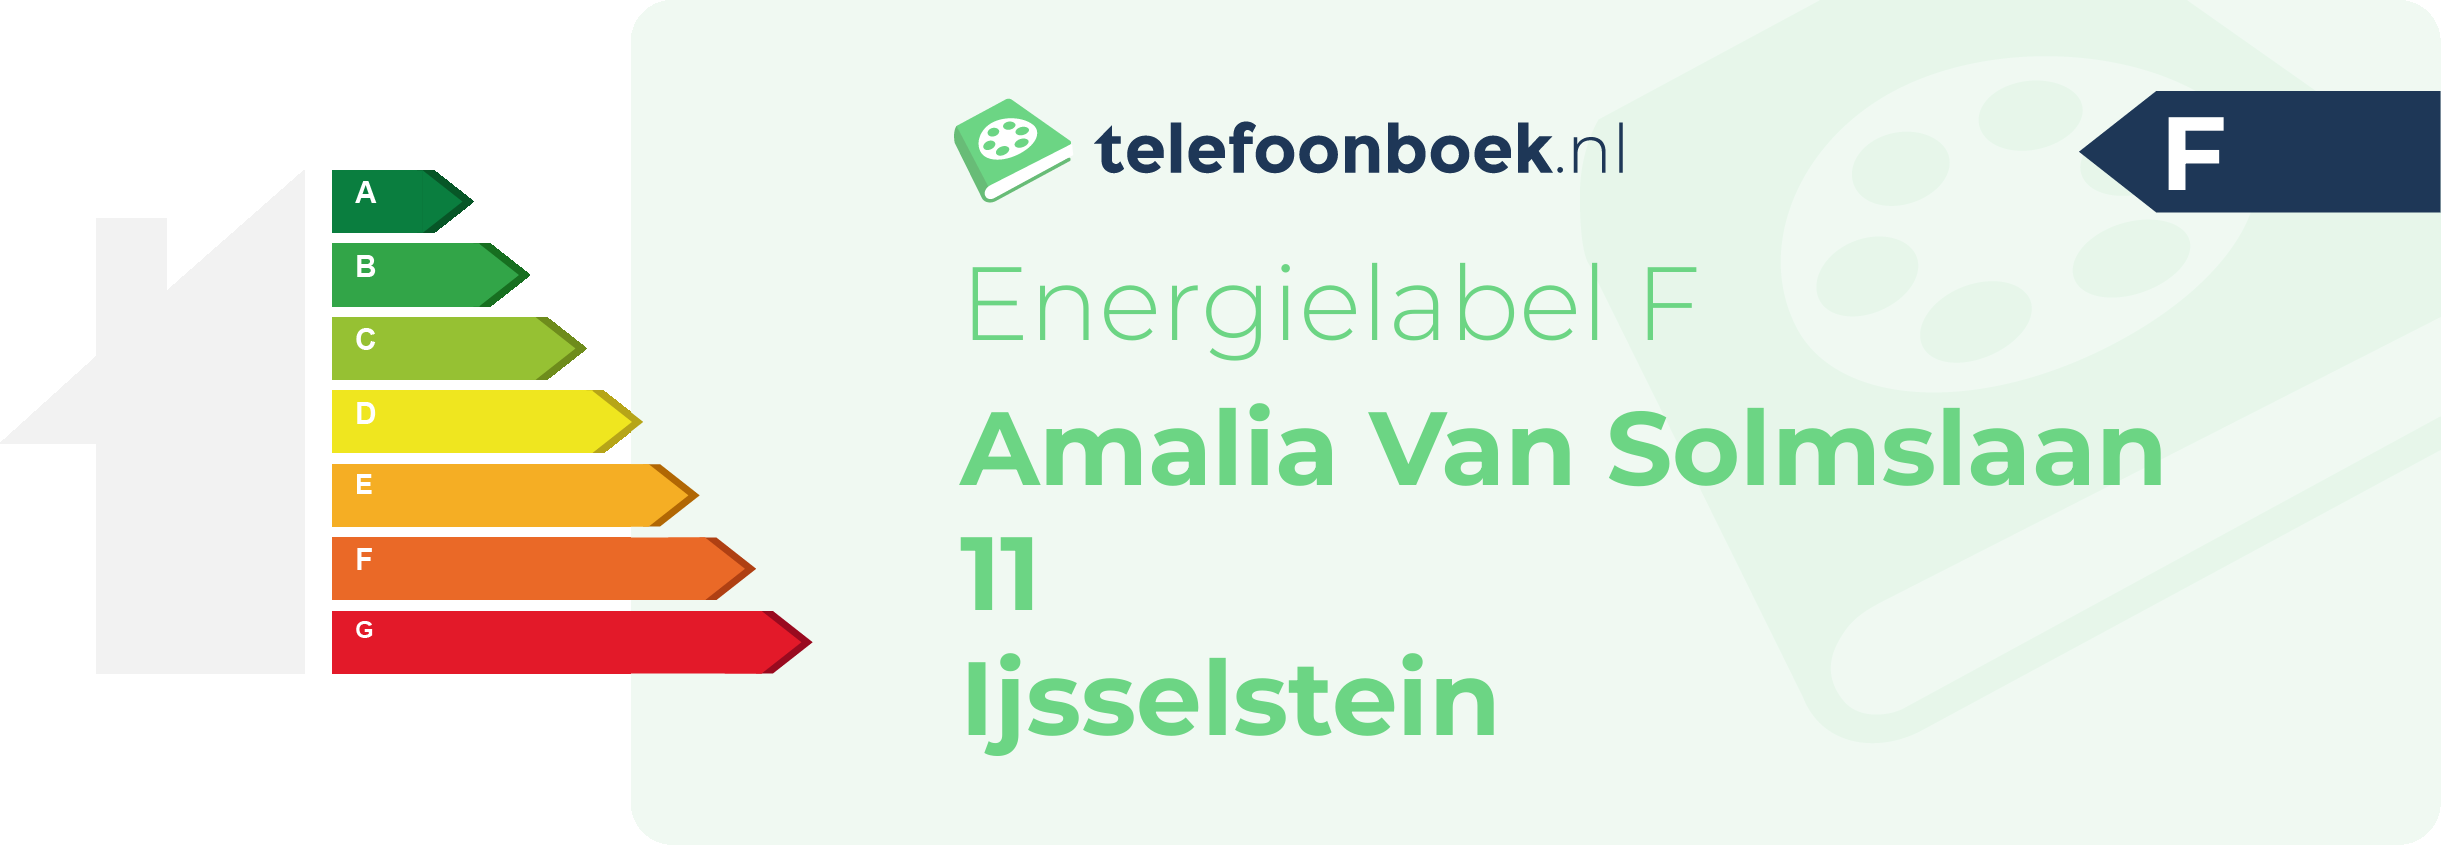 Energielabel Amalia Van Solmslaan 11 Ijsselstein